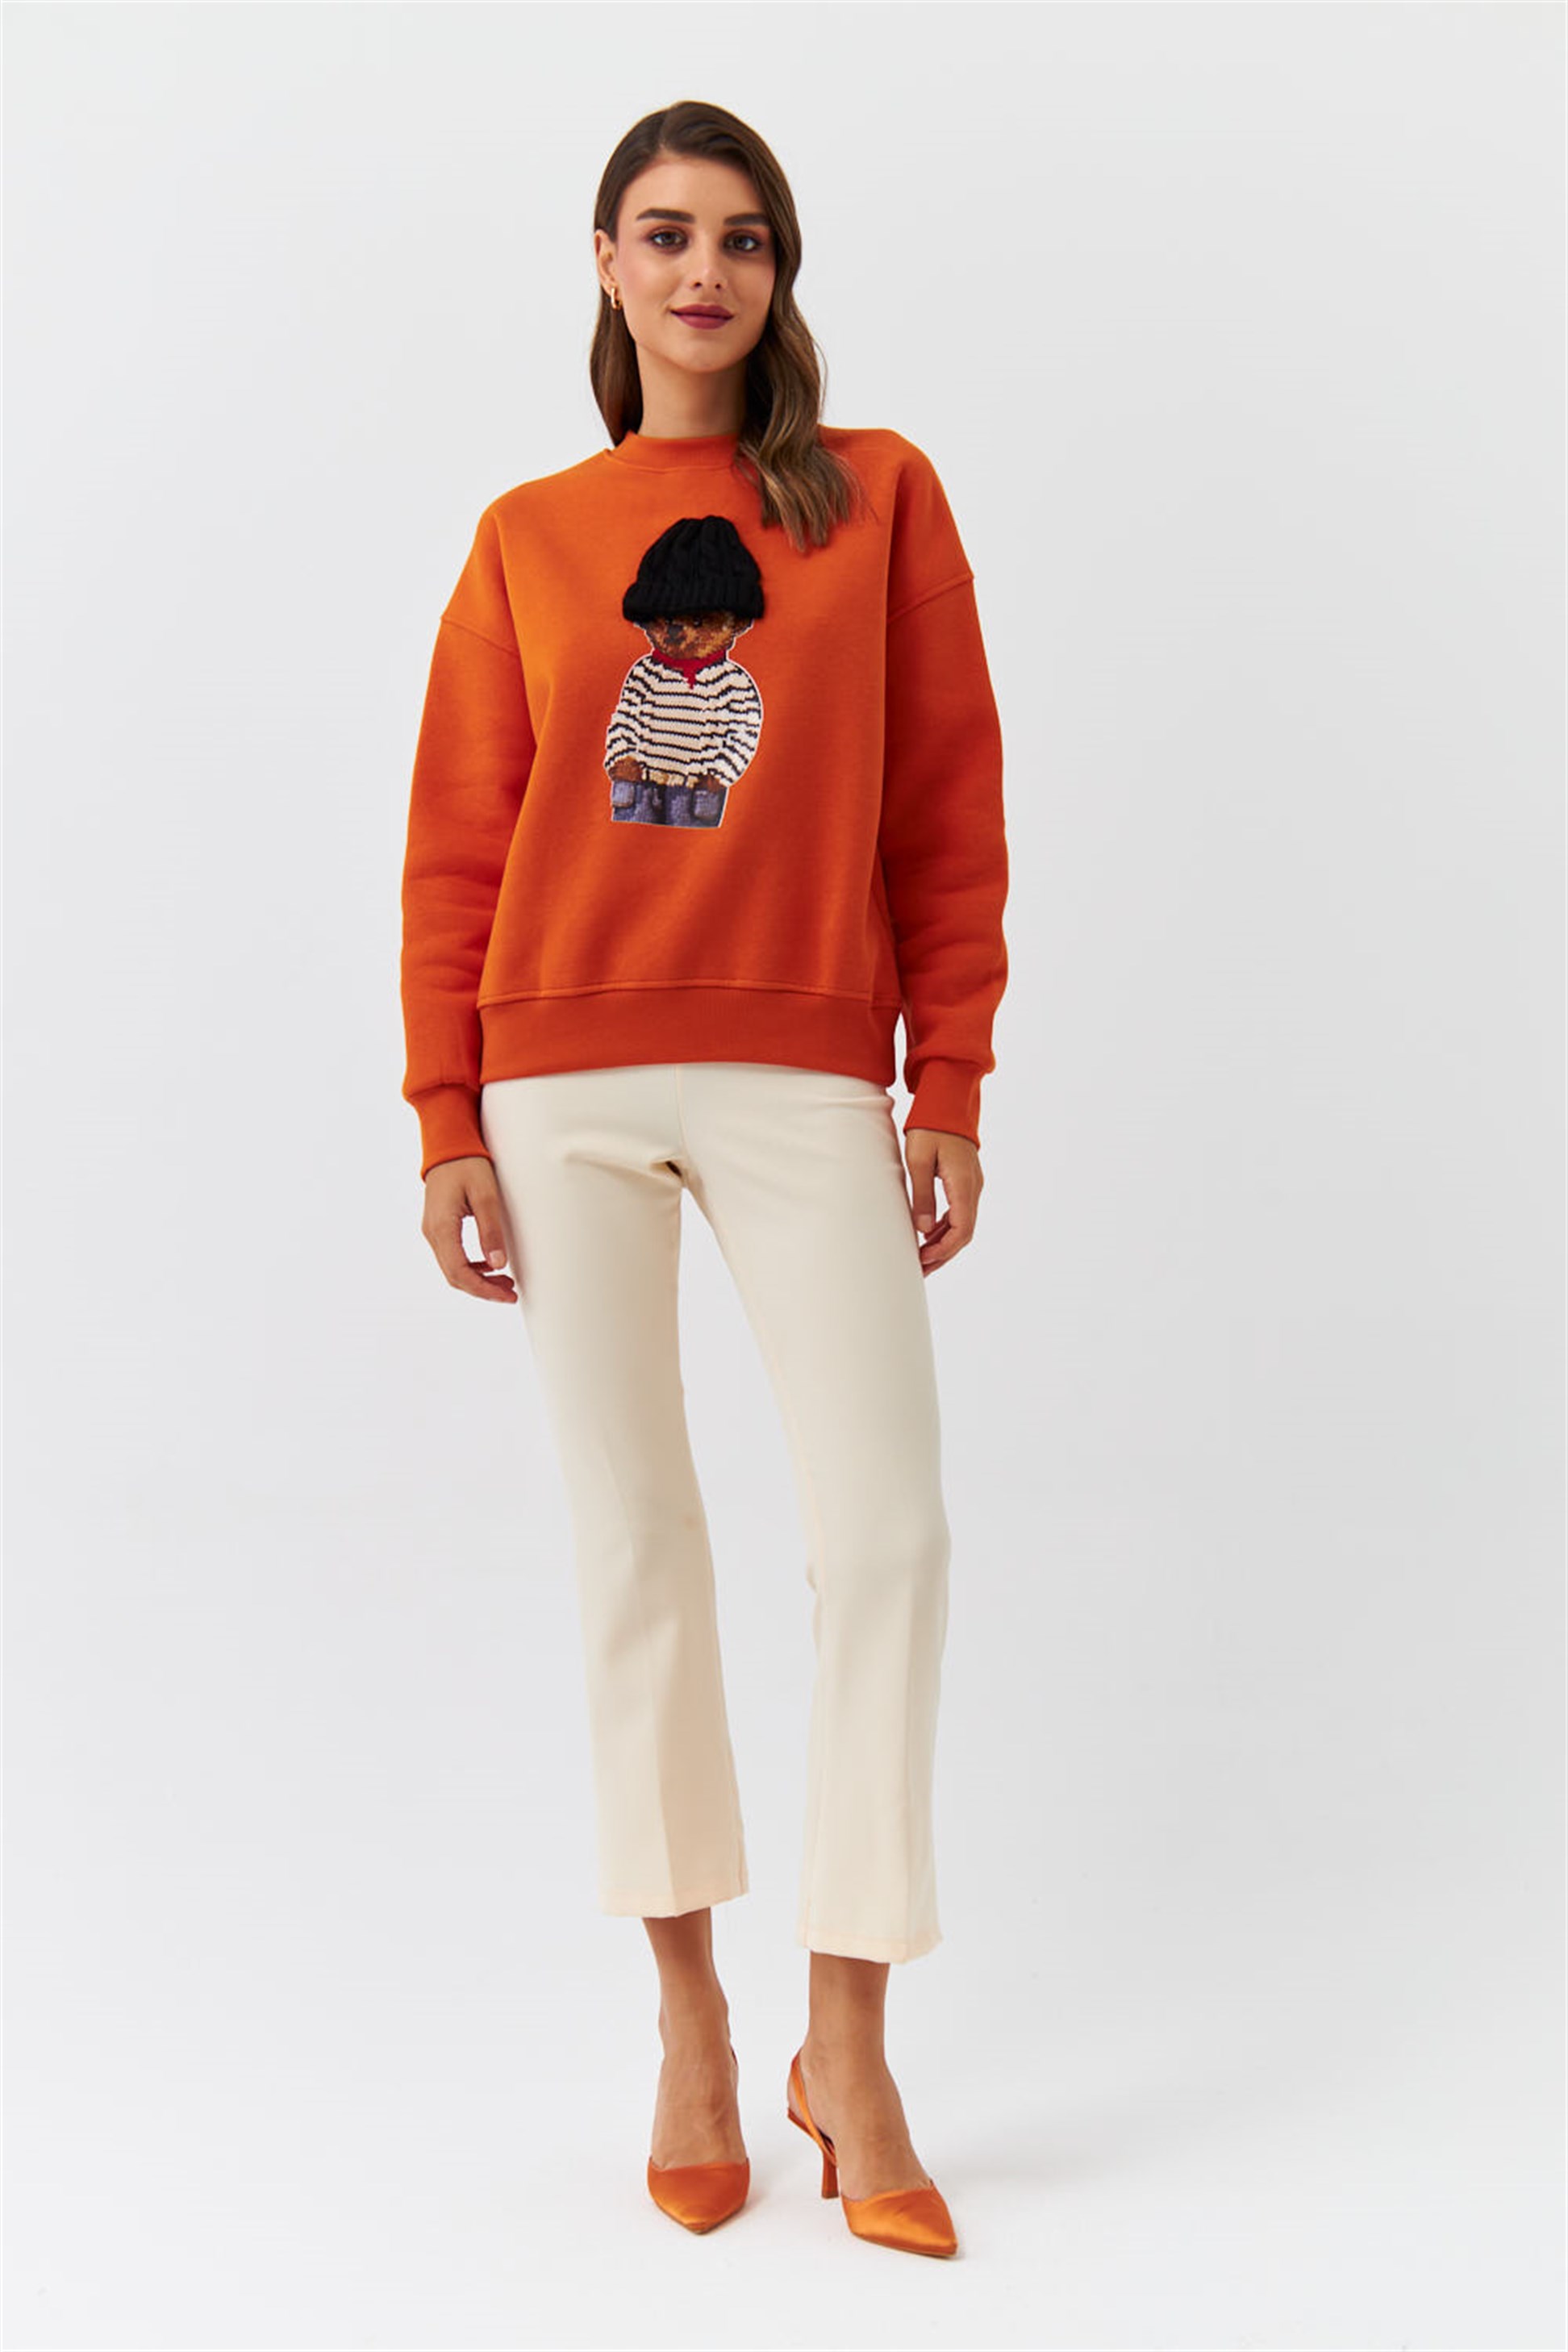 H&M sweatshirt Rabatt 88 % DAMEN Pullovers & Sweatshirts Sweatshirt Stricken Rot S 